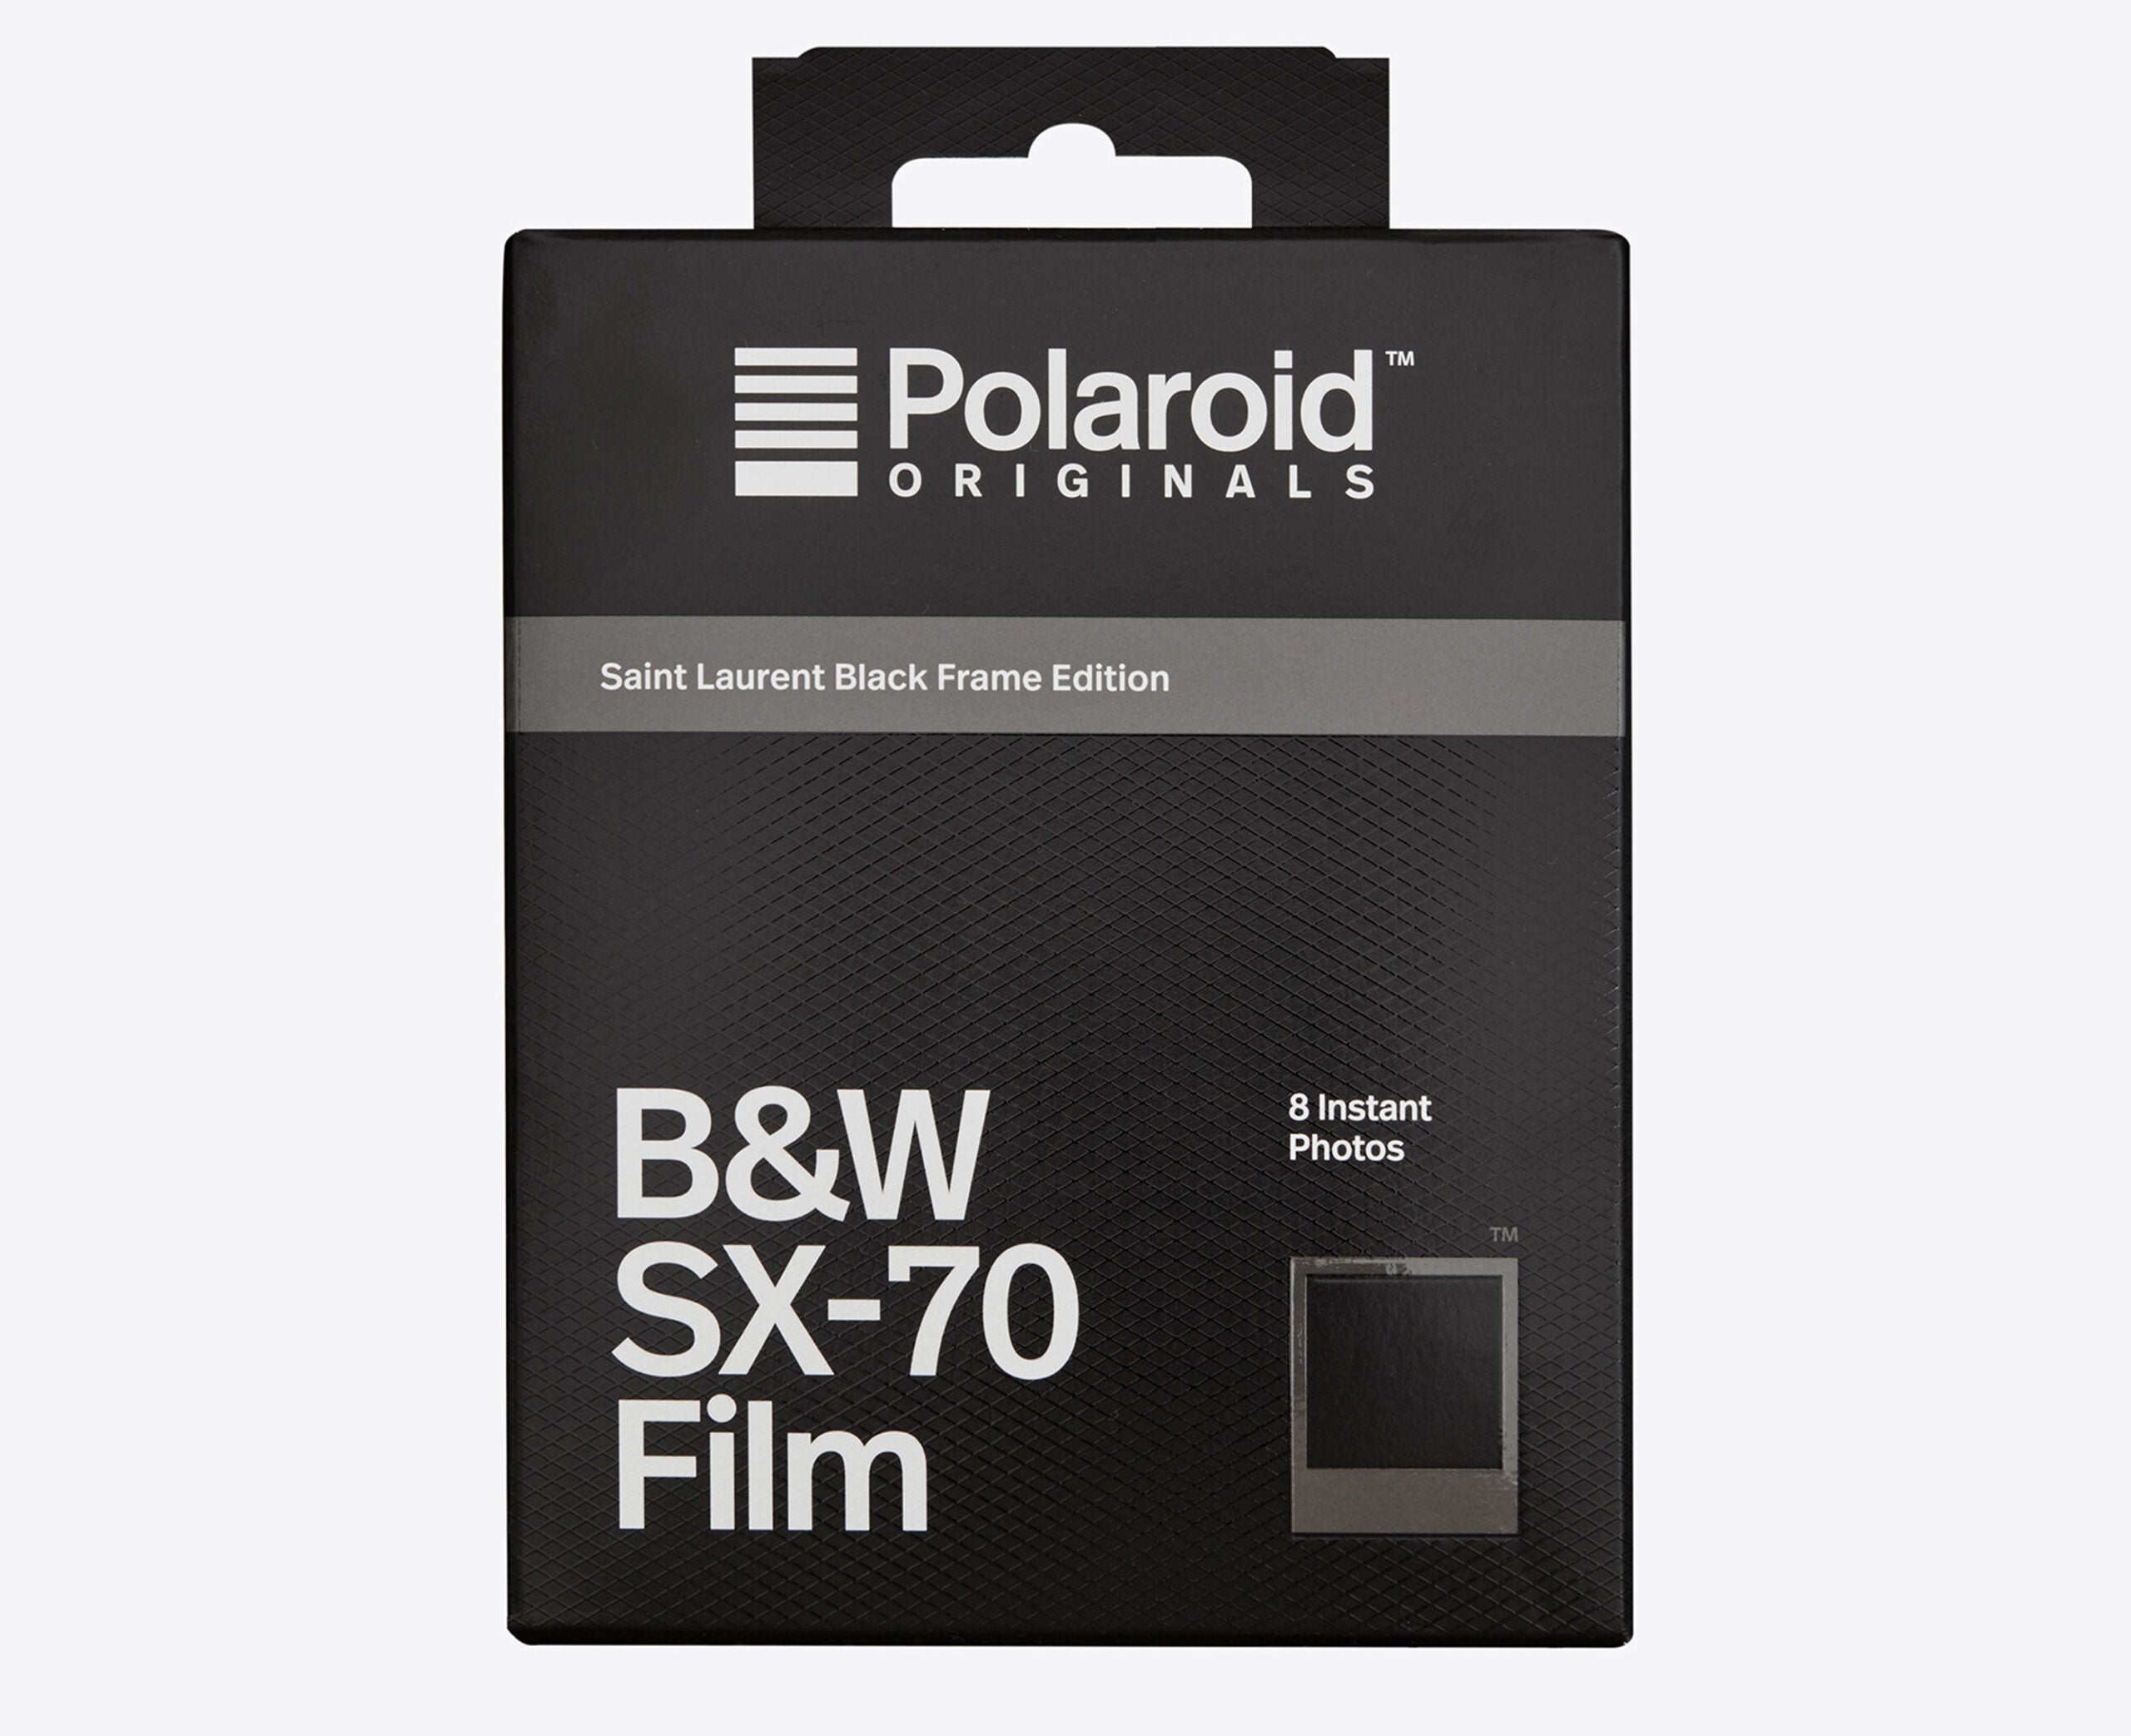 Limited edition Polaroid x Saint Laurent film features a black frame.